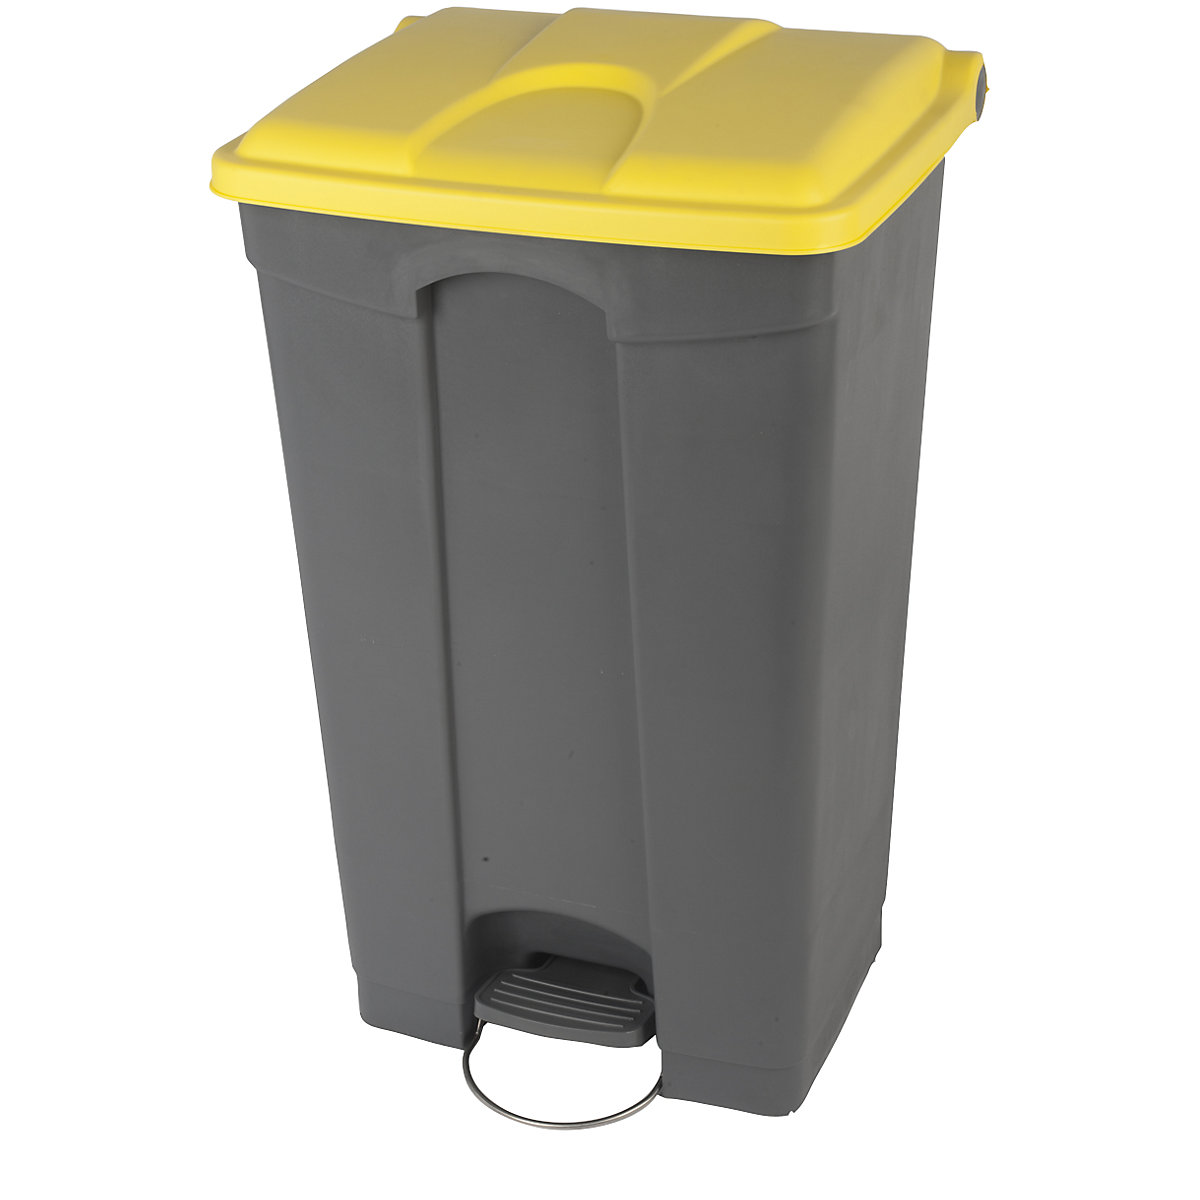 EUROKRAFTbasic – Pedal waste collector, capacity 90 l, WxHxD 505 x 790 x 410 mm, grey, yellow lid